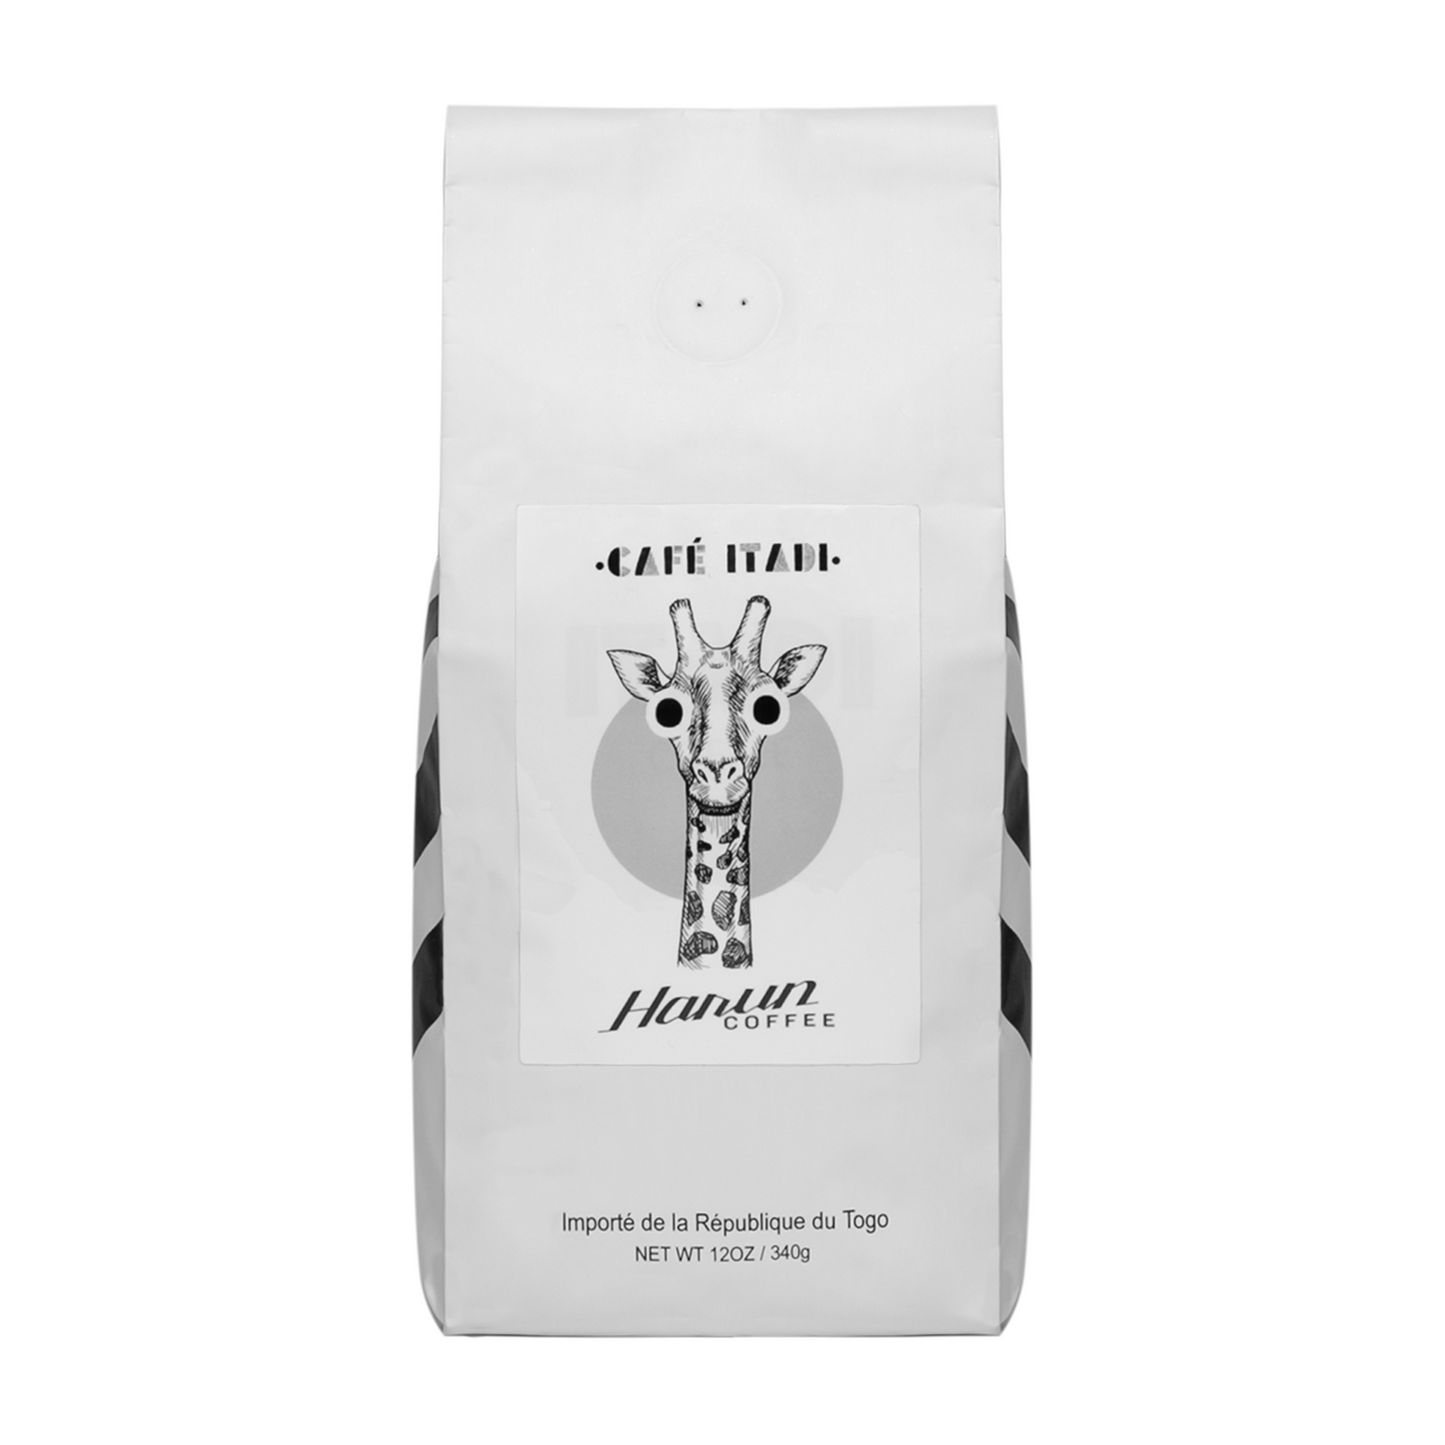 Café Itadi + Harun “Air Afrique” Coffee